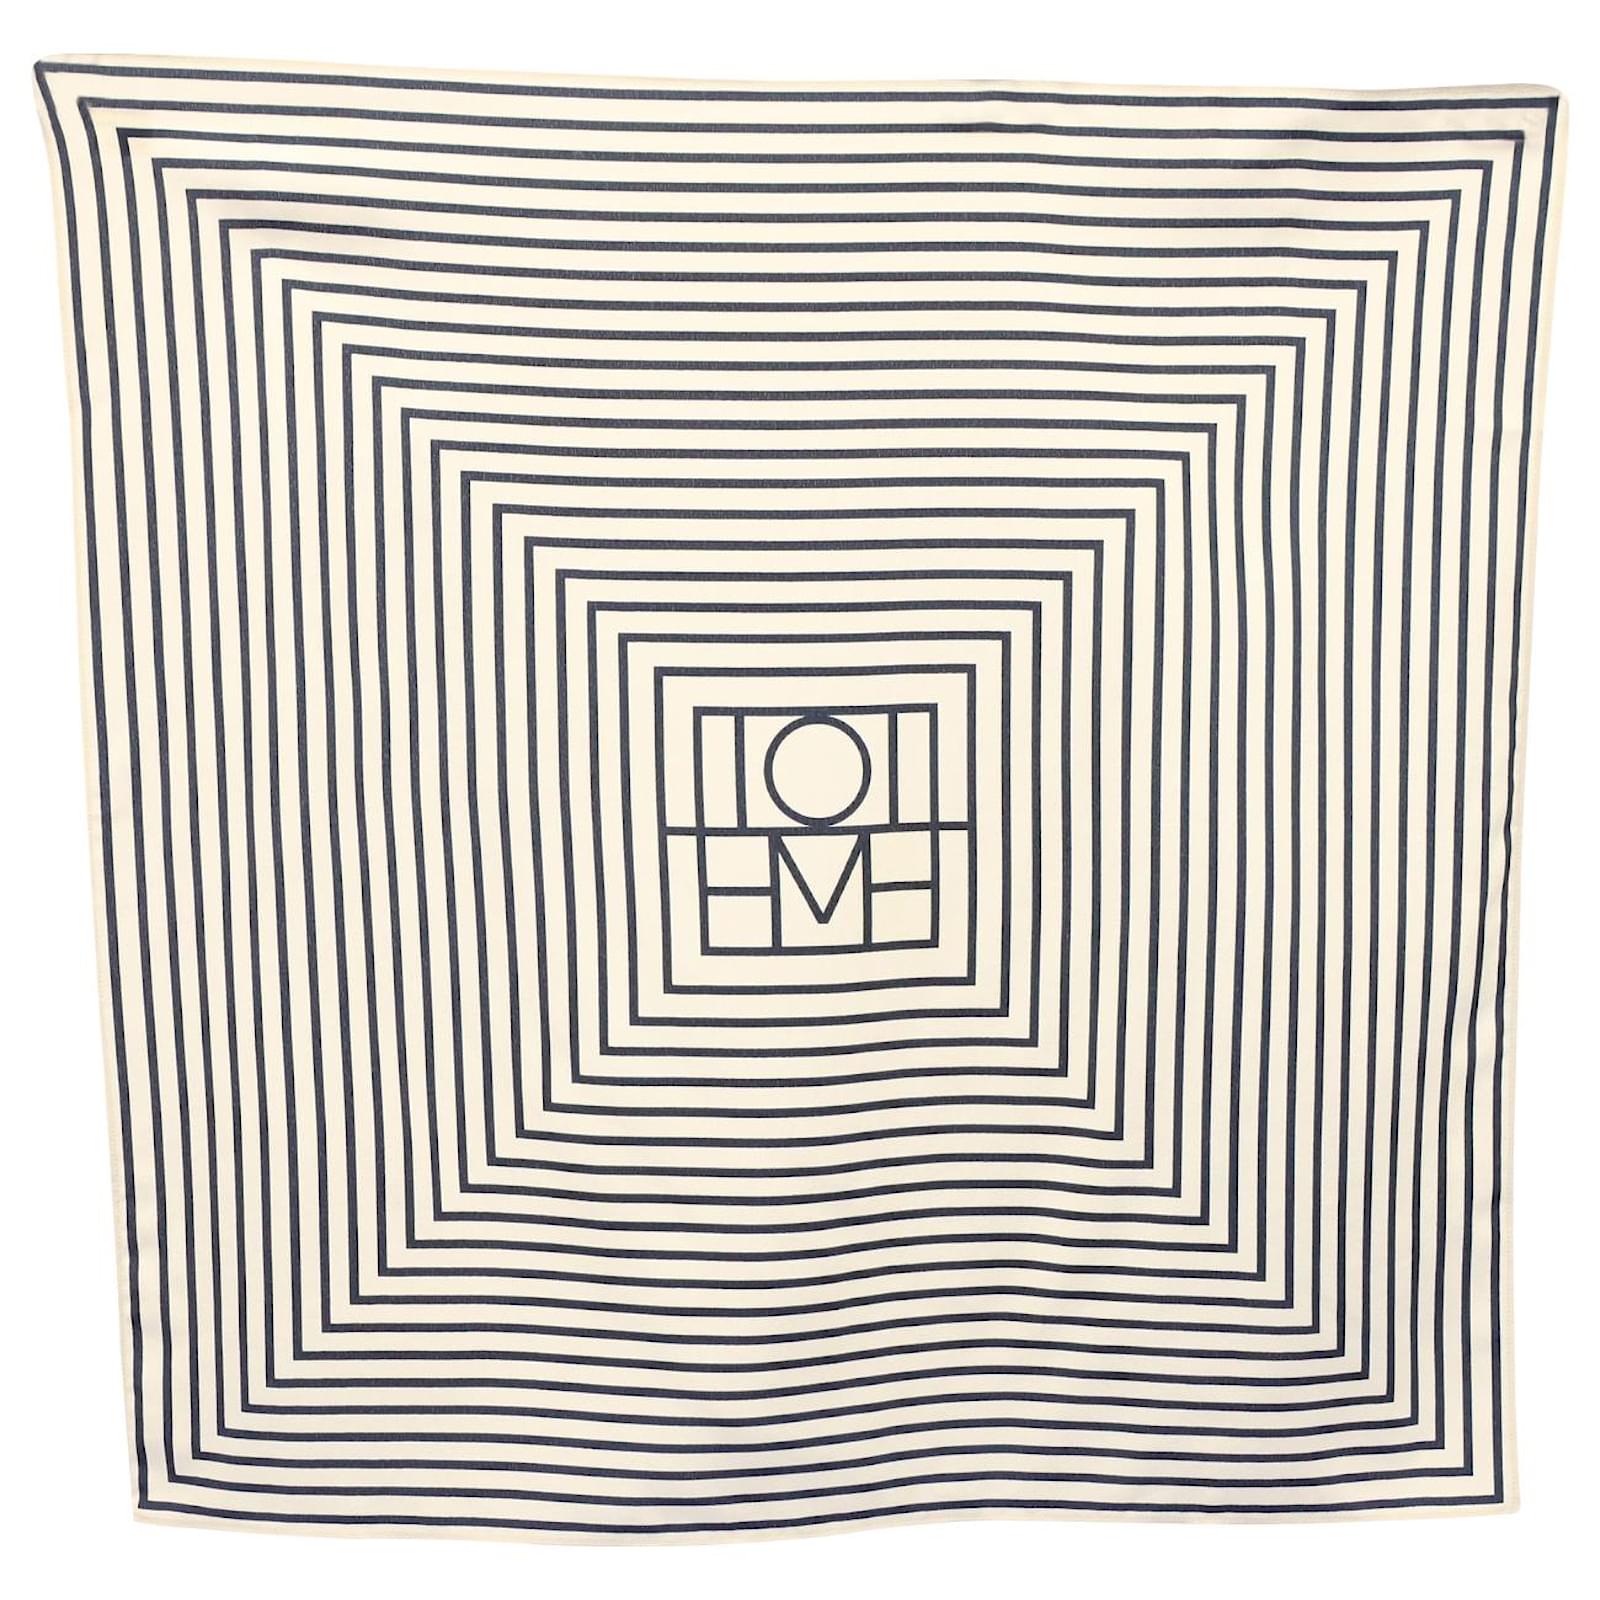 Monogram Wool And Silk Scarf in Brown - Toteme